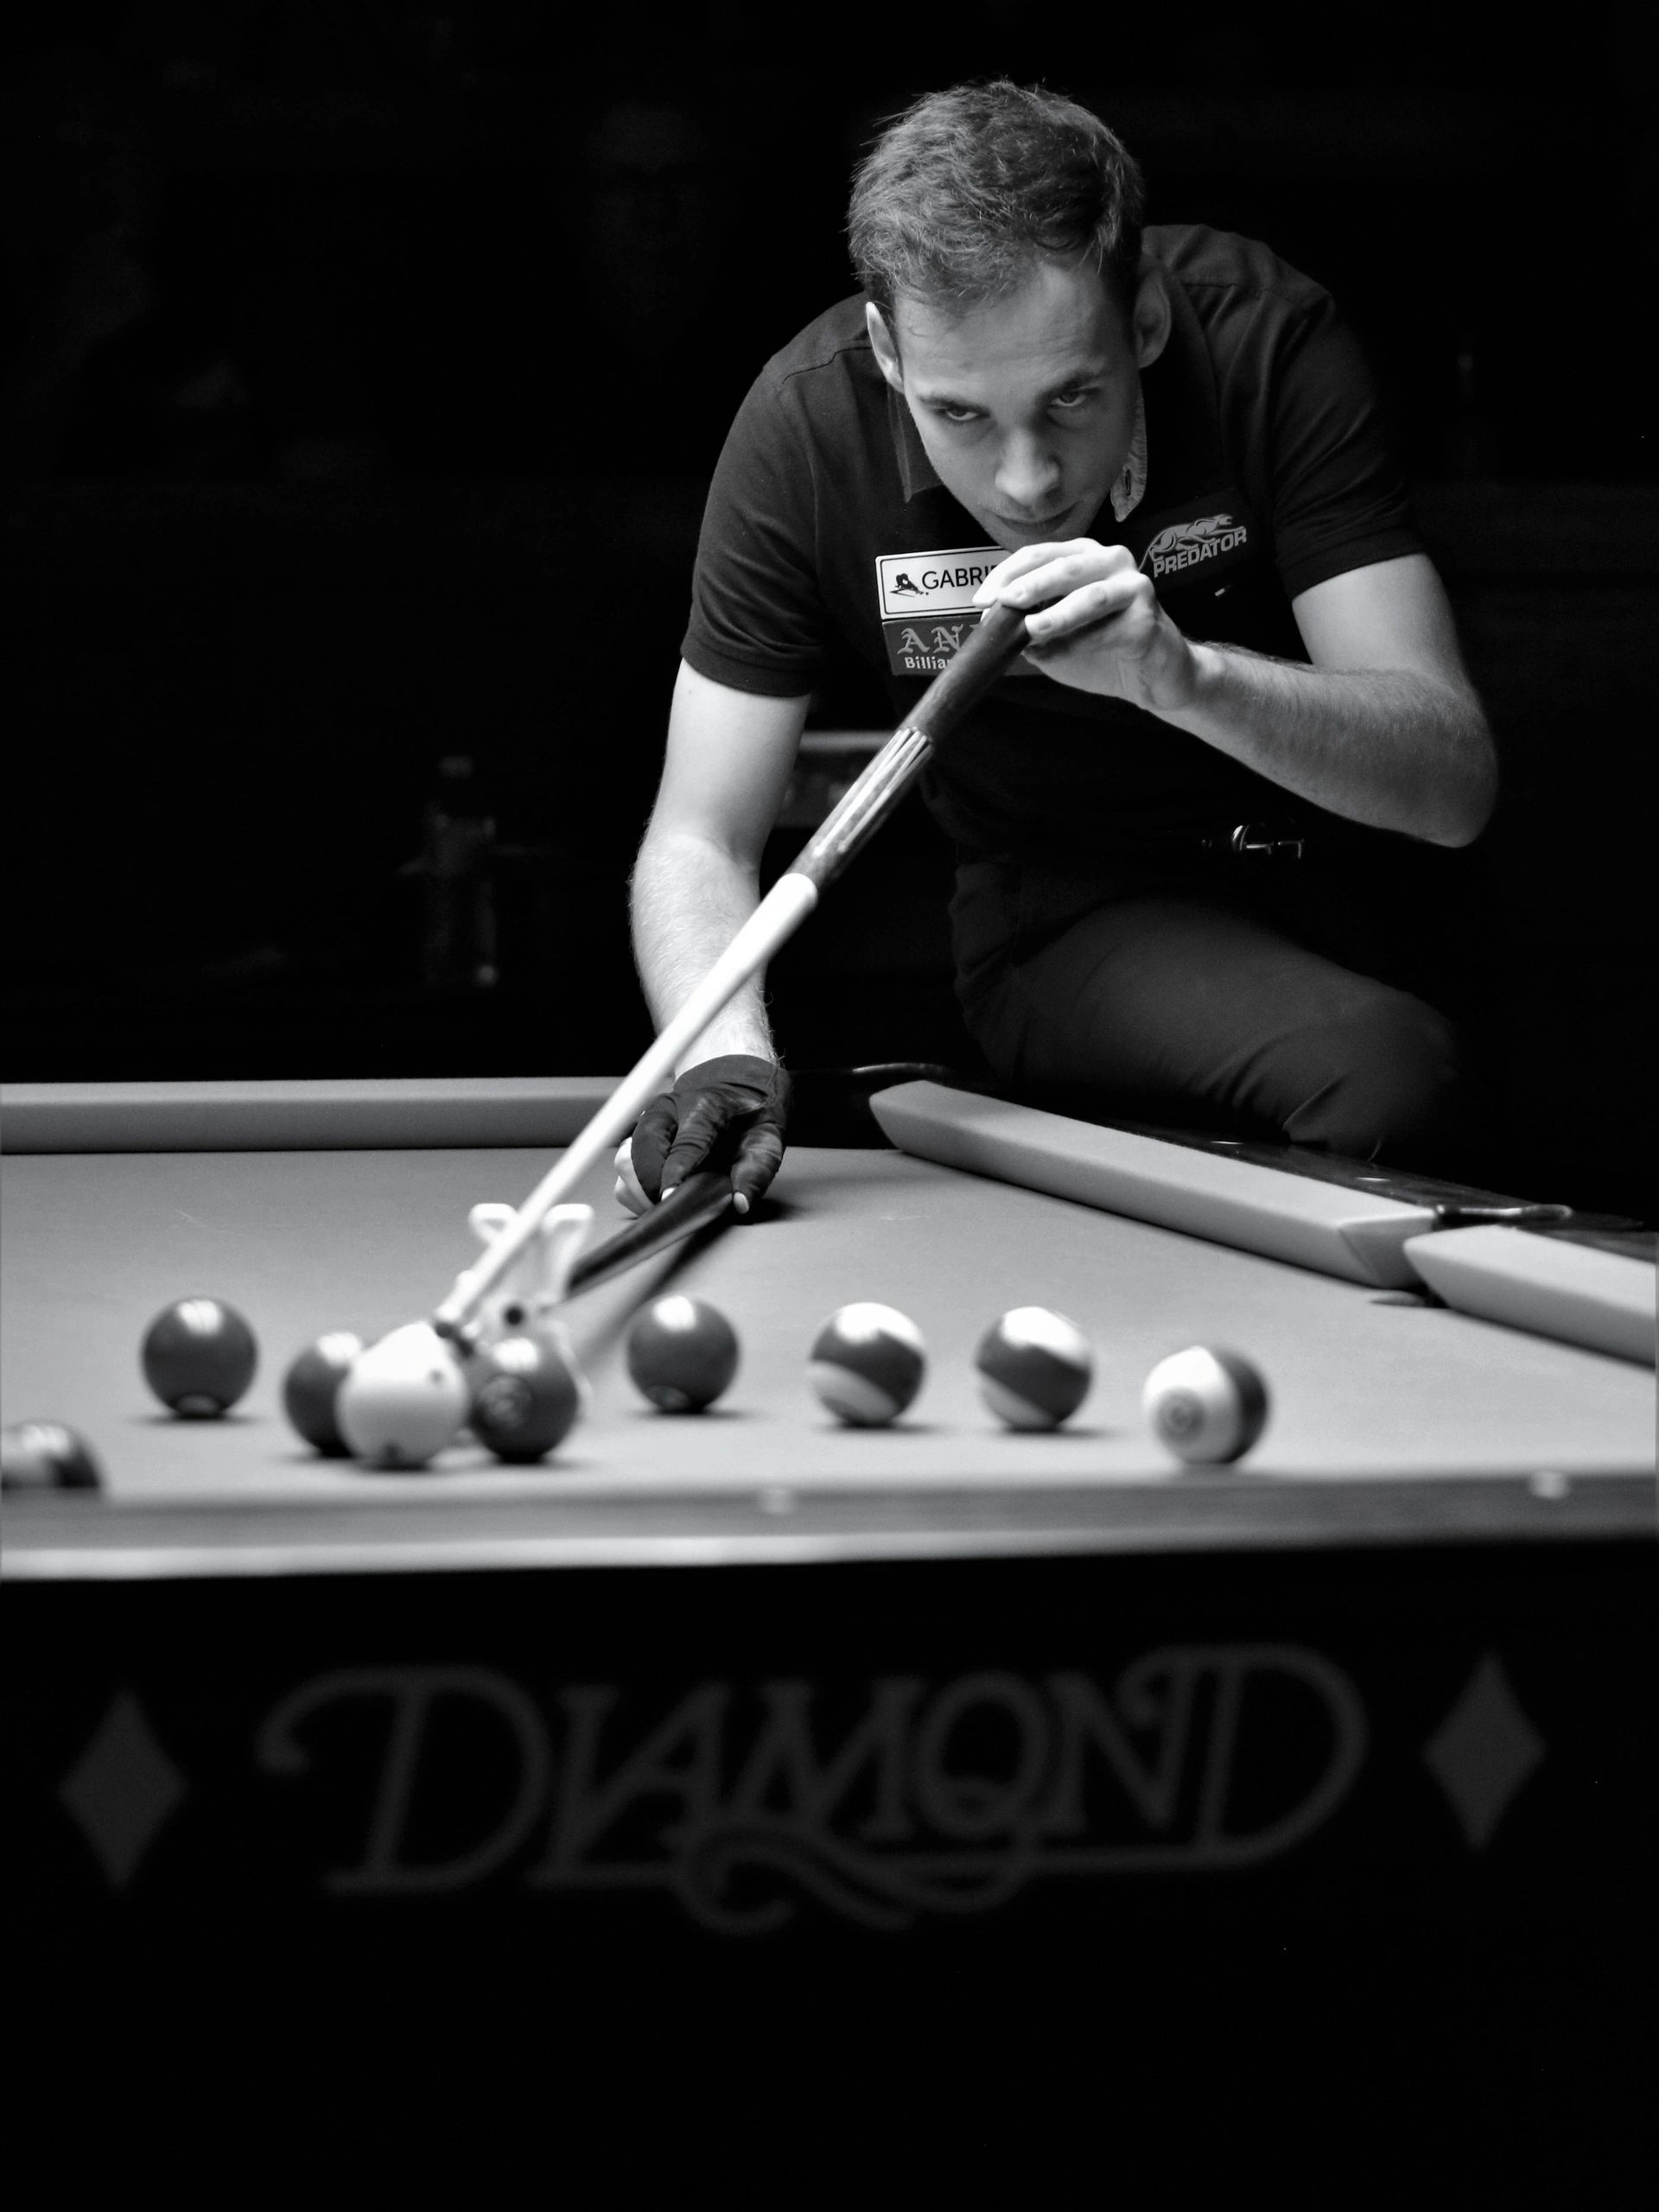 Diamond Billiards Set For 2022 World Pool Championship - News 